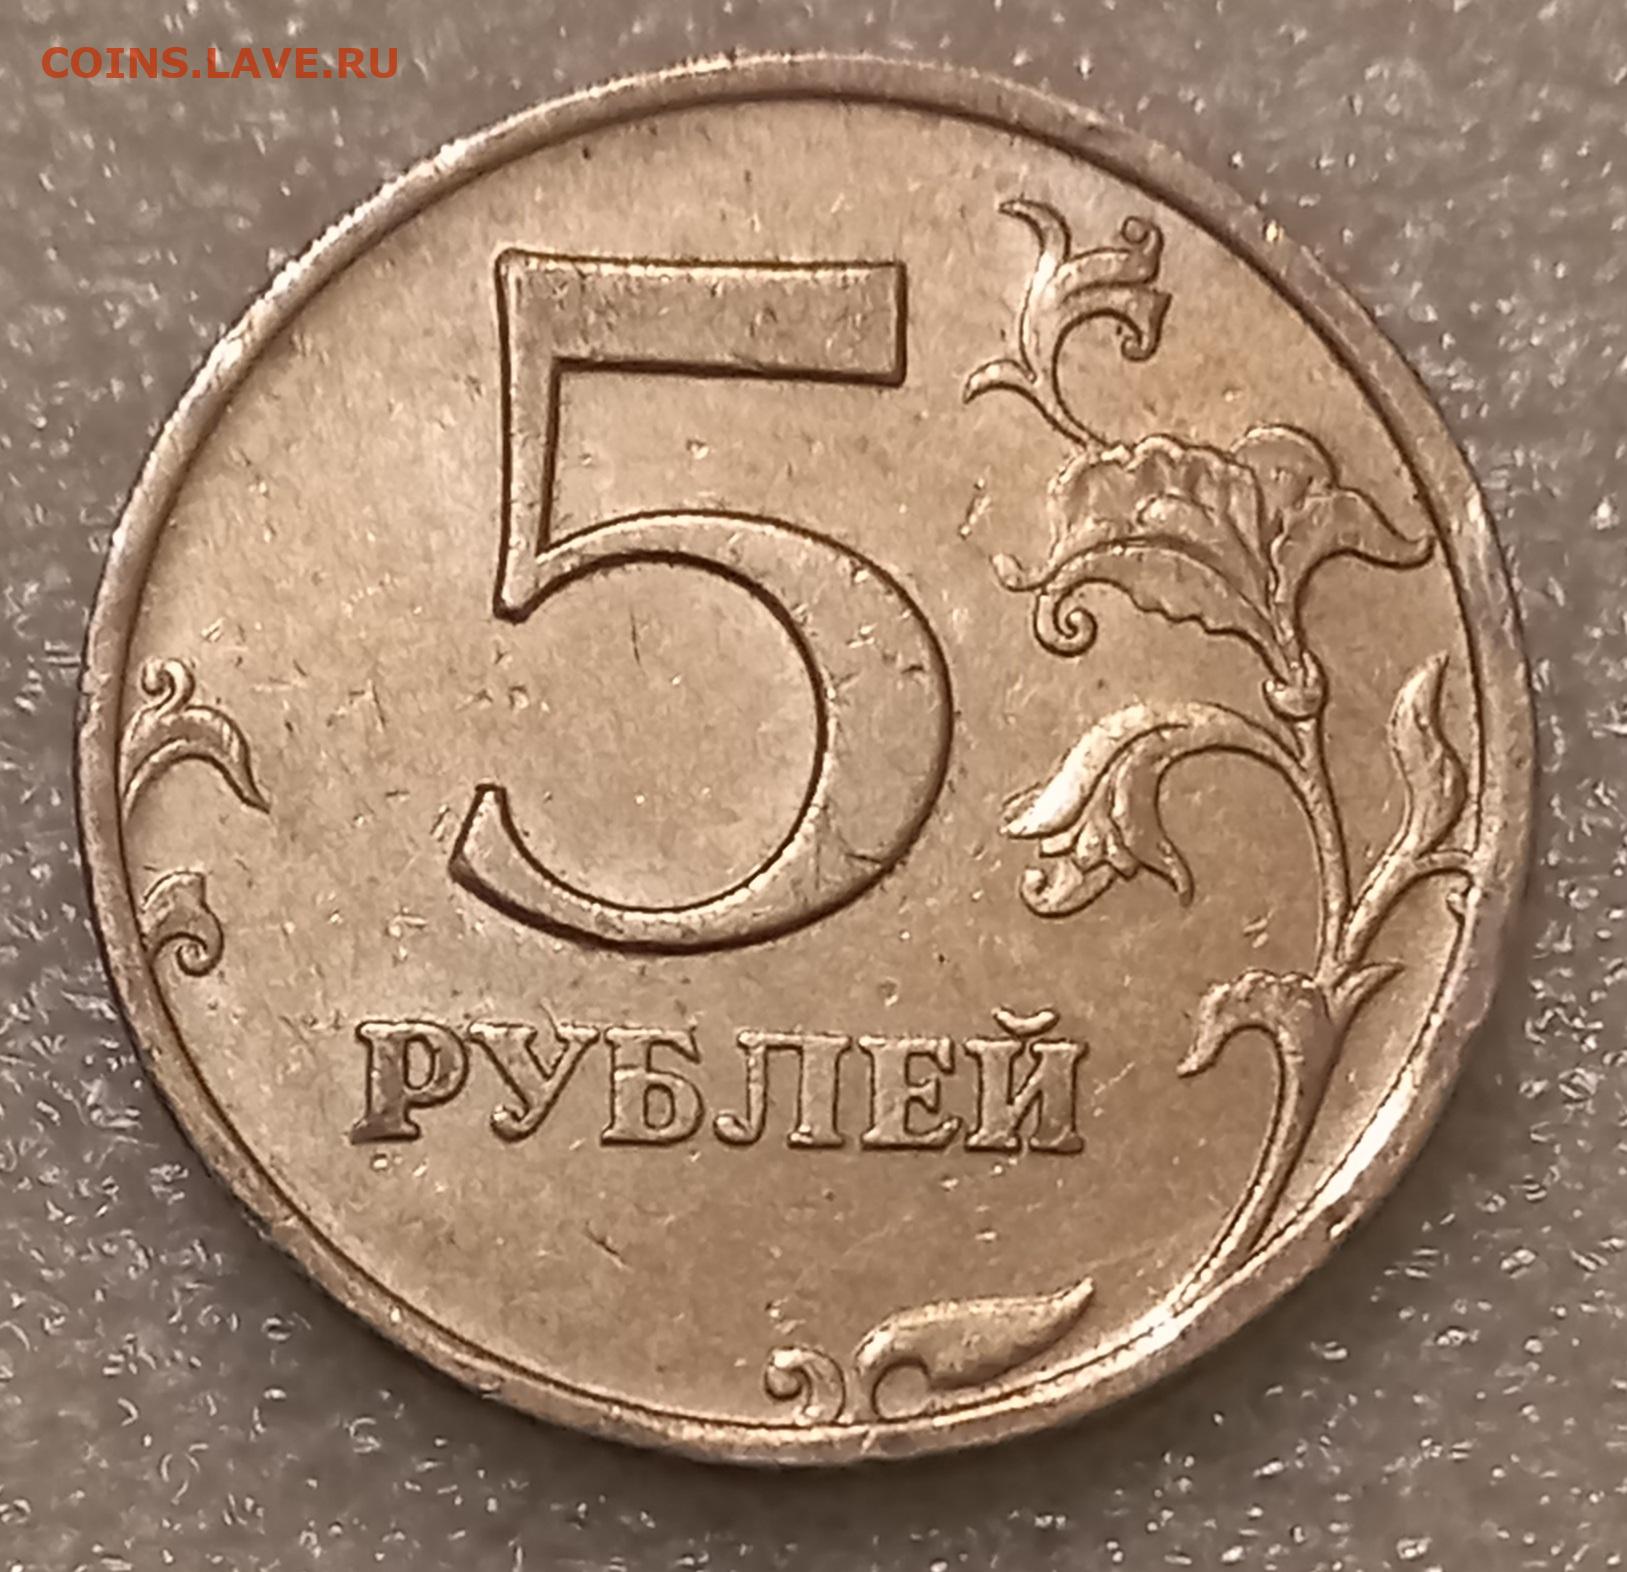 9 5 рубли. Редкая монета 5 рублей 1998. 5 Рублей 2008 СПМД. Редкая монета 5 рублей 2008. 5 Рублей 2008.